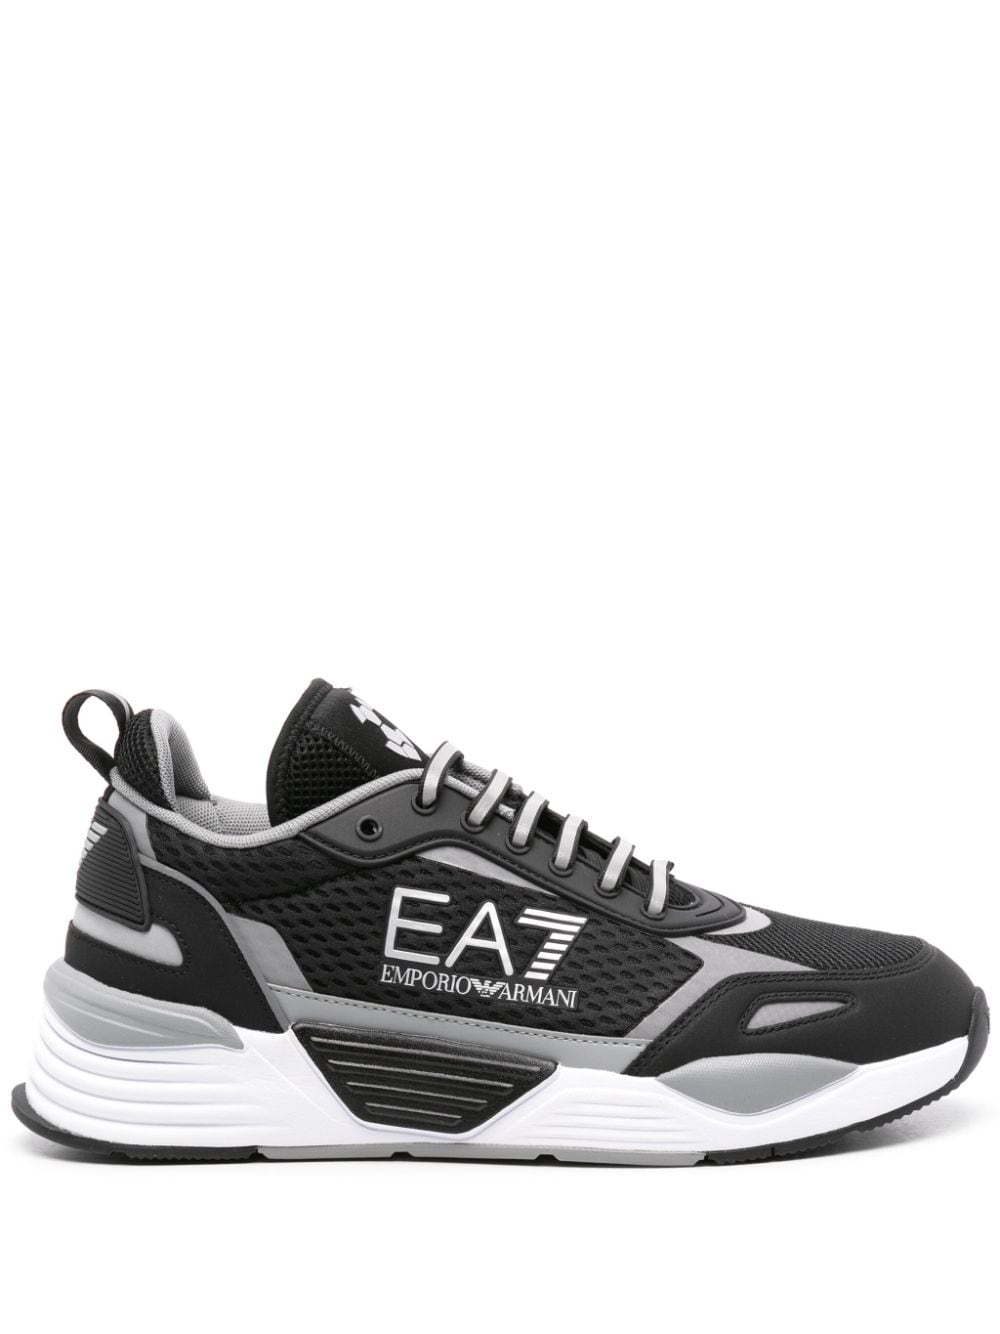 Ea7 Emporio Armani Ace Runner chunky sneakers - Black von Ea7 Emporio Armani